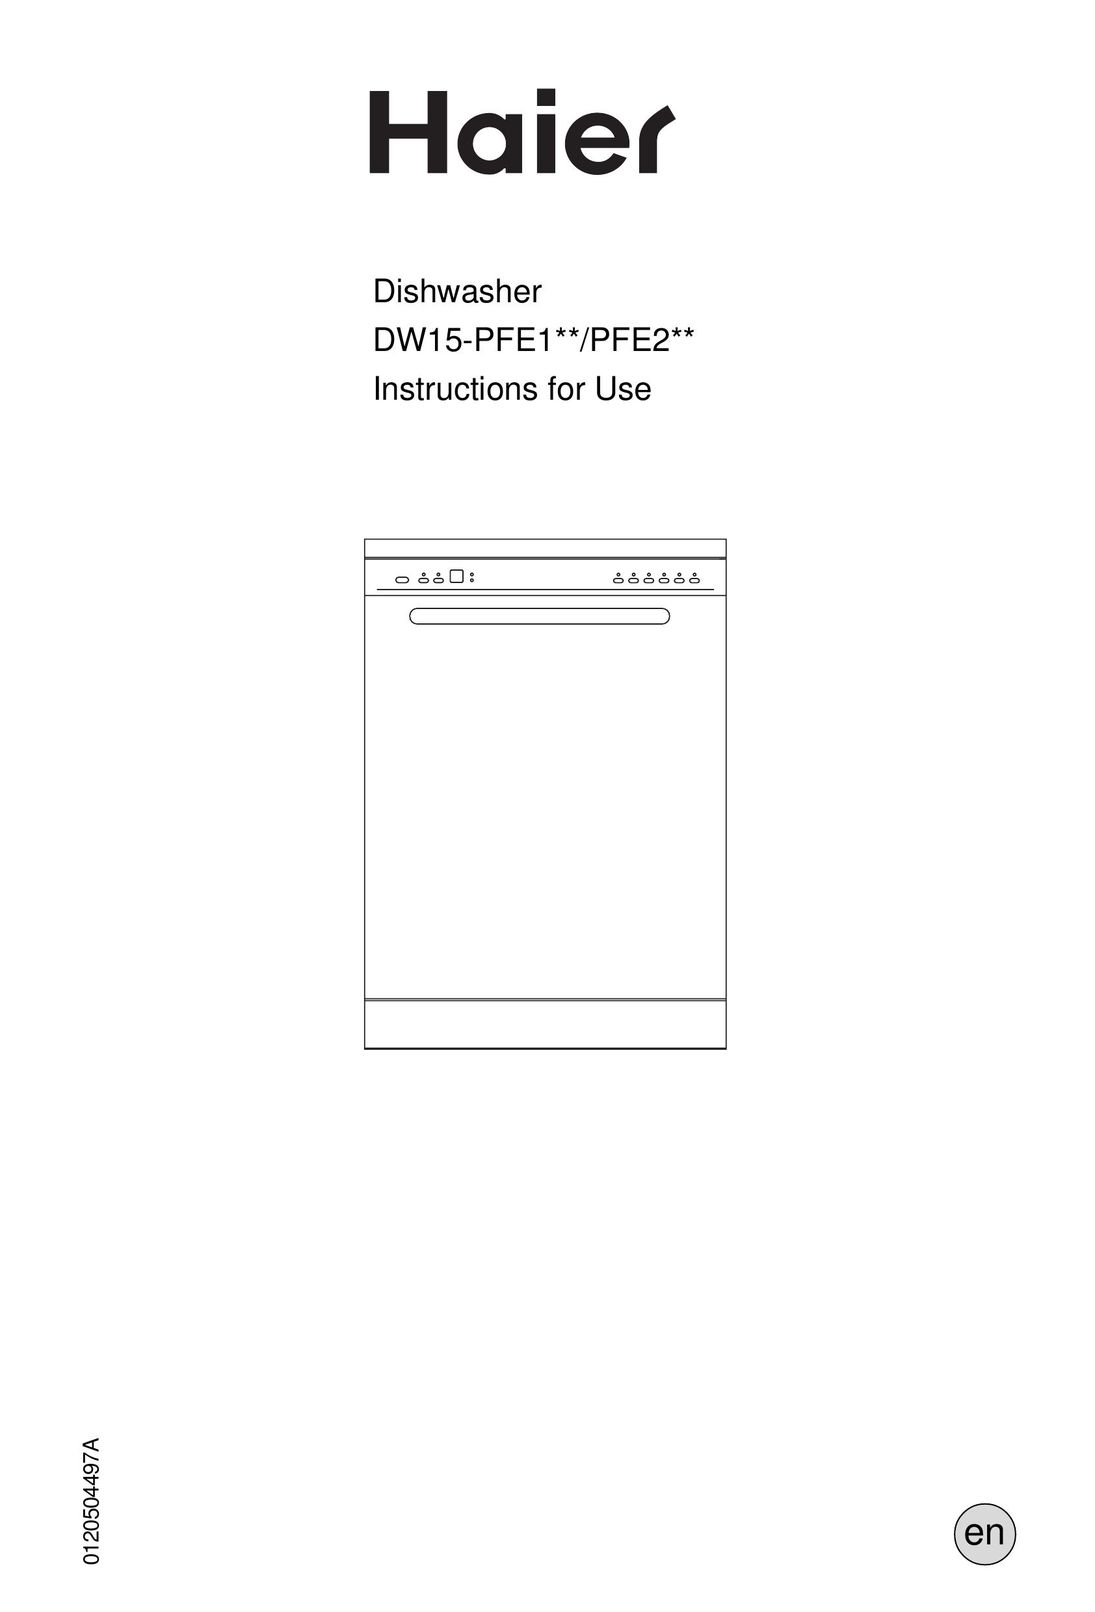 Haier DW15-PFE1 Dishwasher User Manual